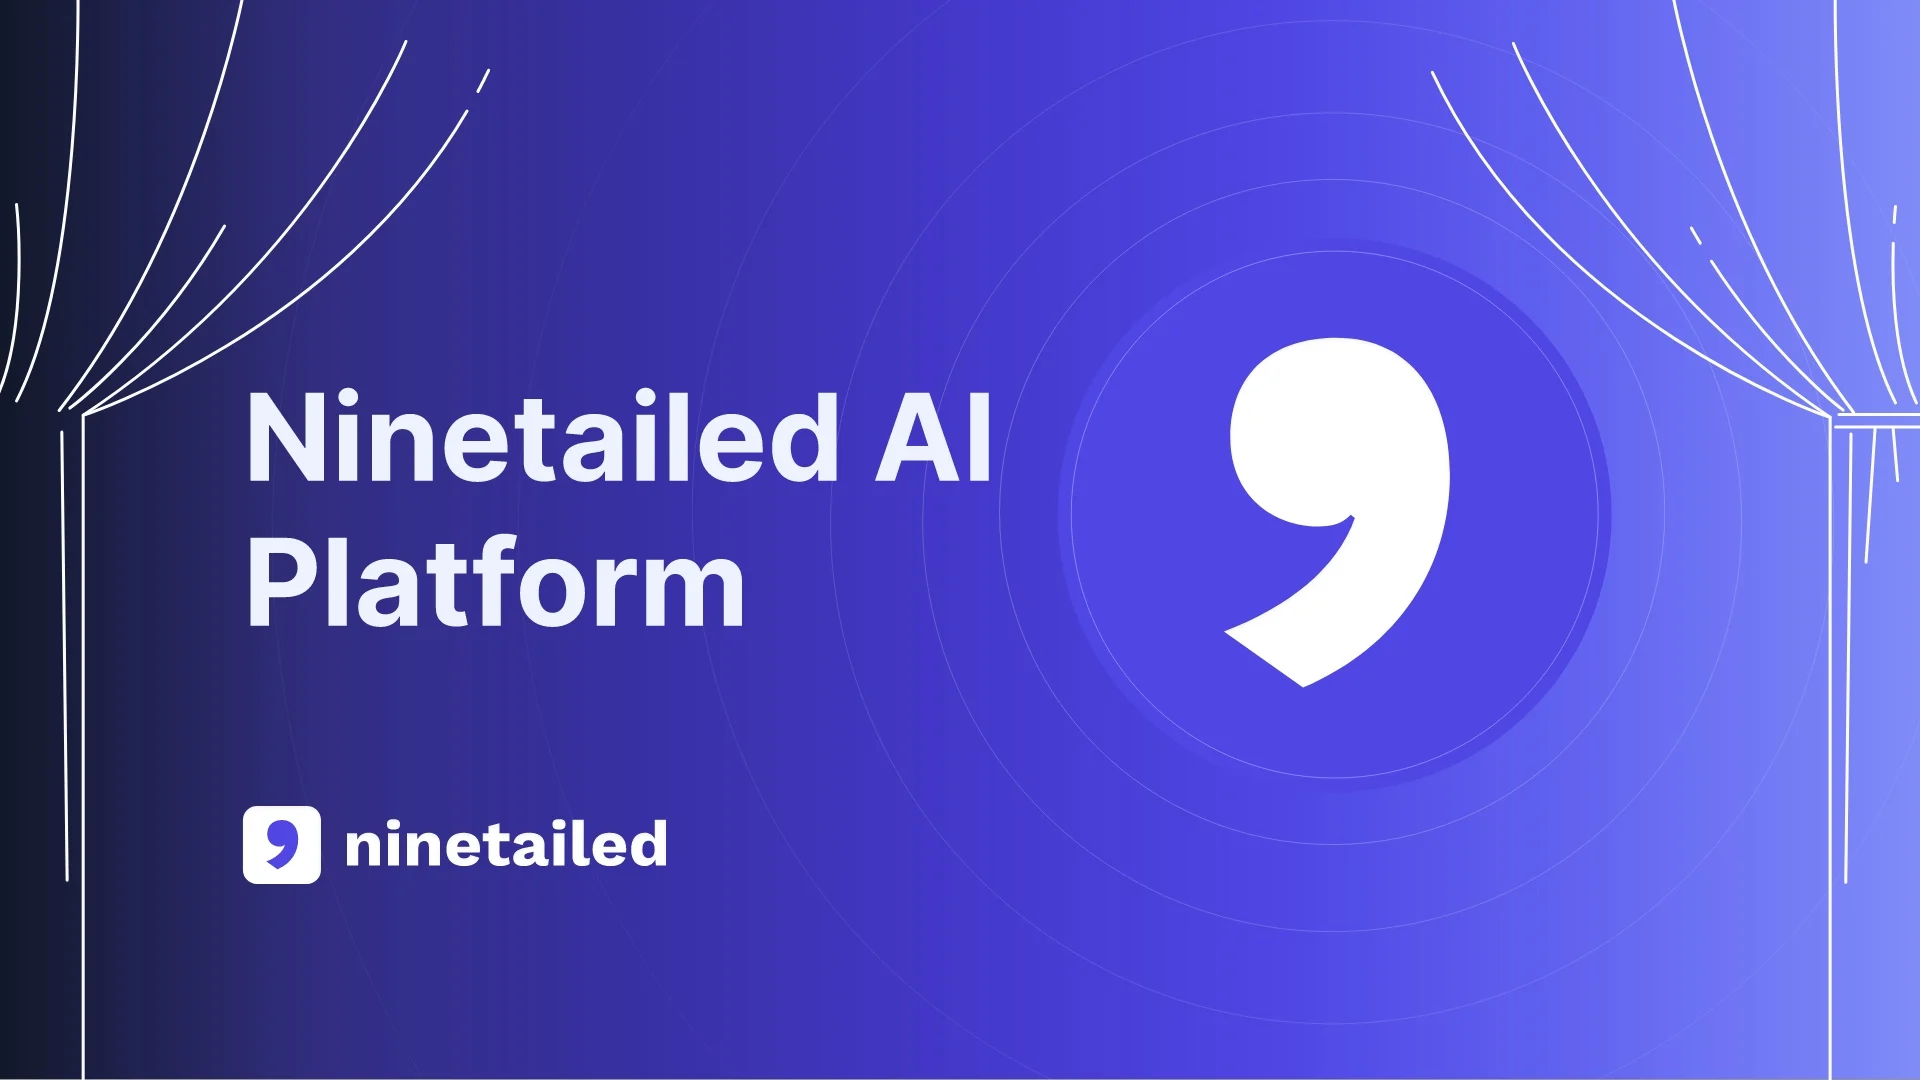 Ninetailed AI Platform: Revealing the Latest and Greatest